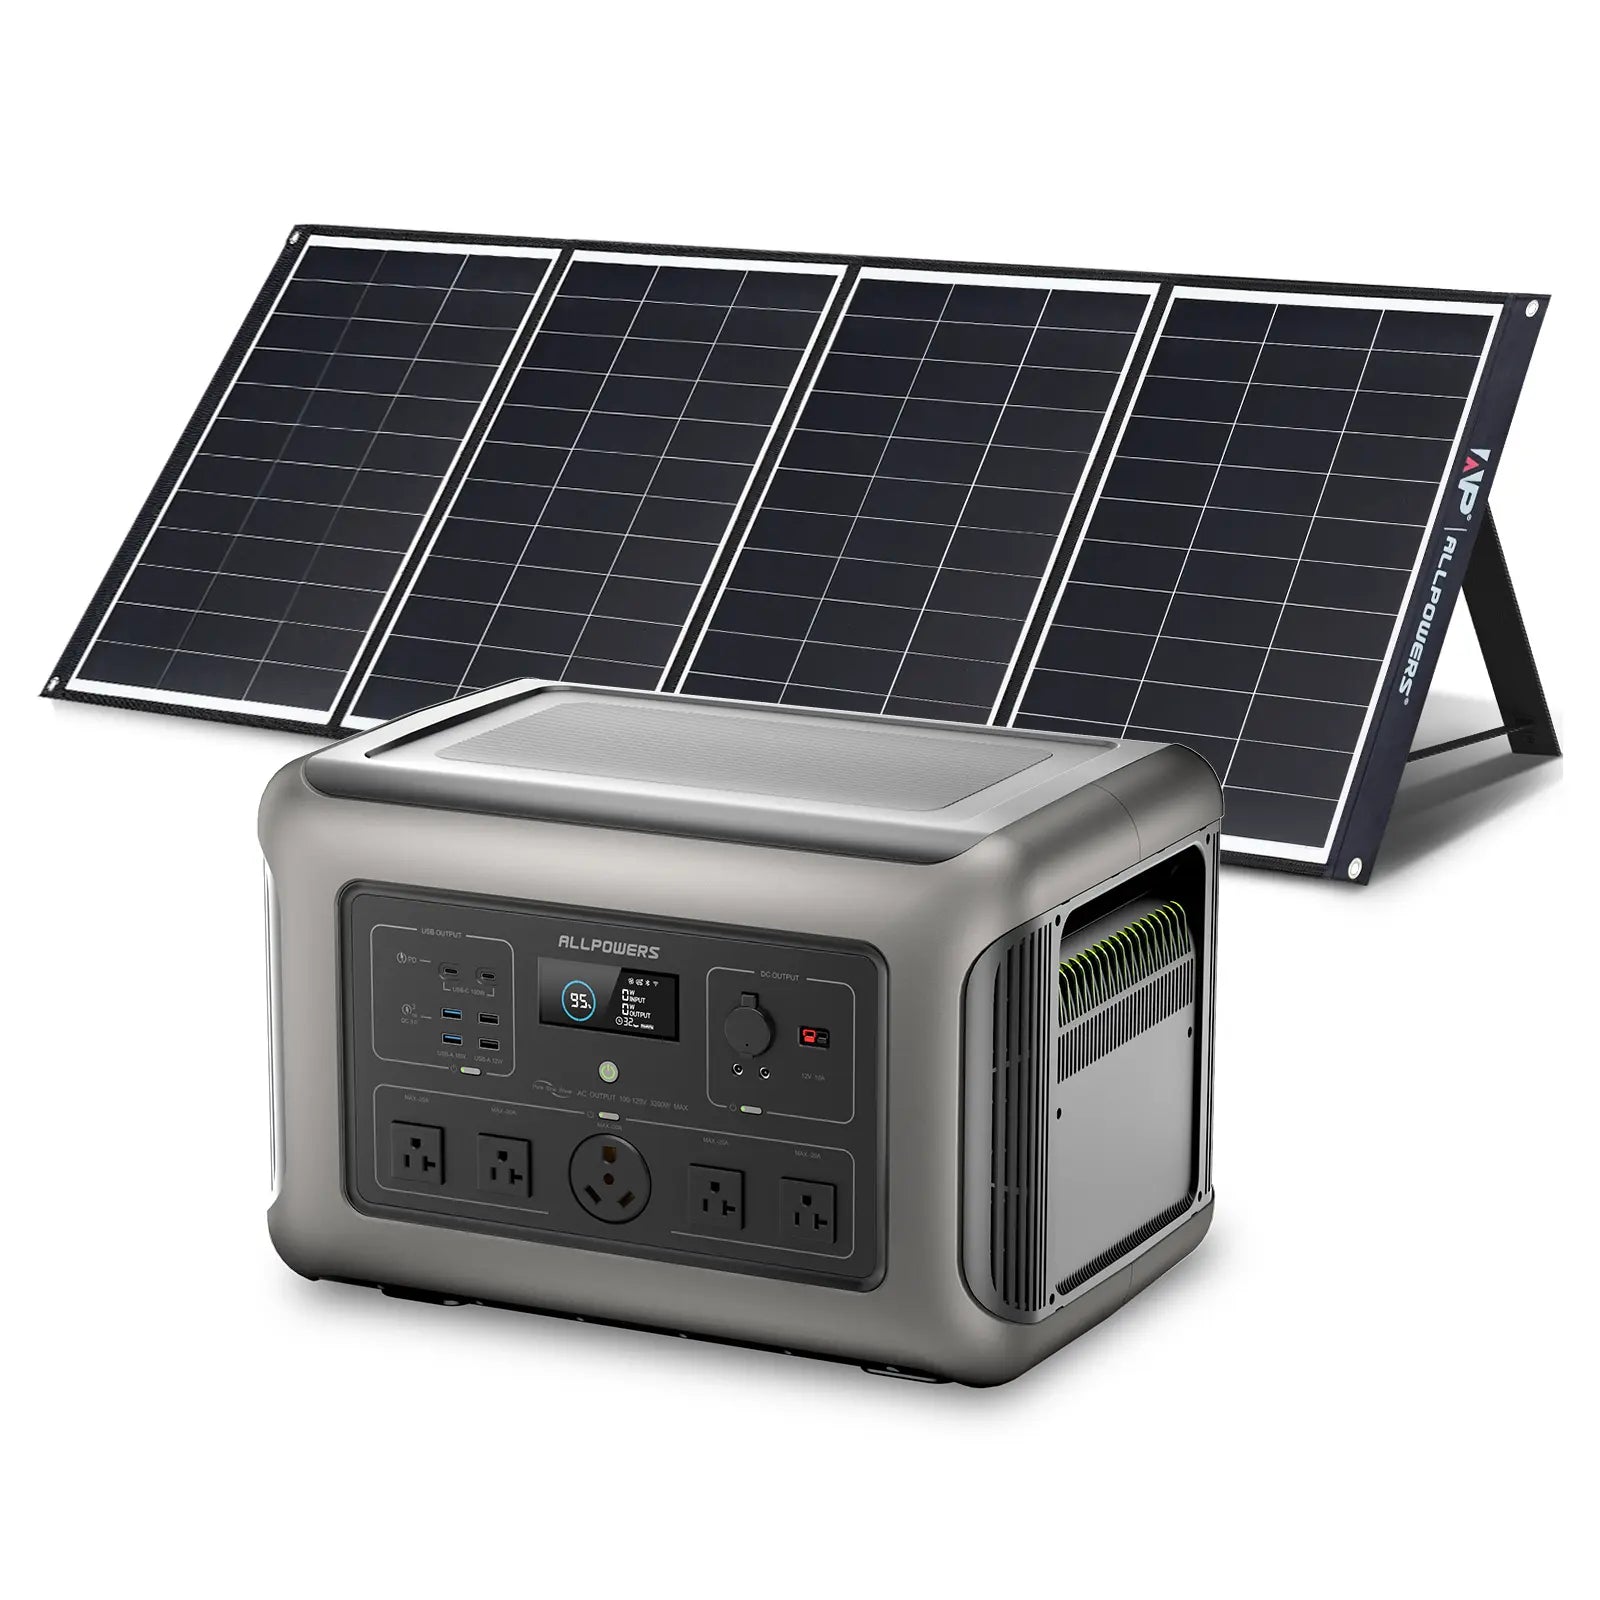 ALLPOWERS Solar Generator Kit 3200W (R3500 + SP035 200W Solar Panel)